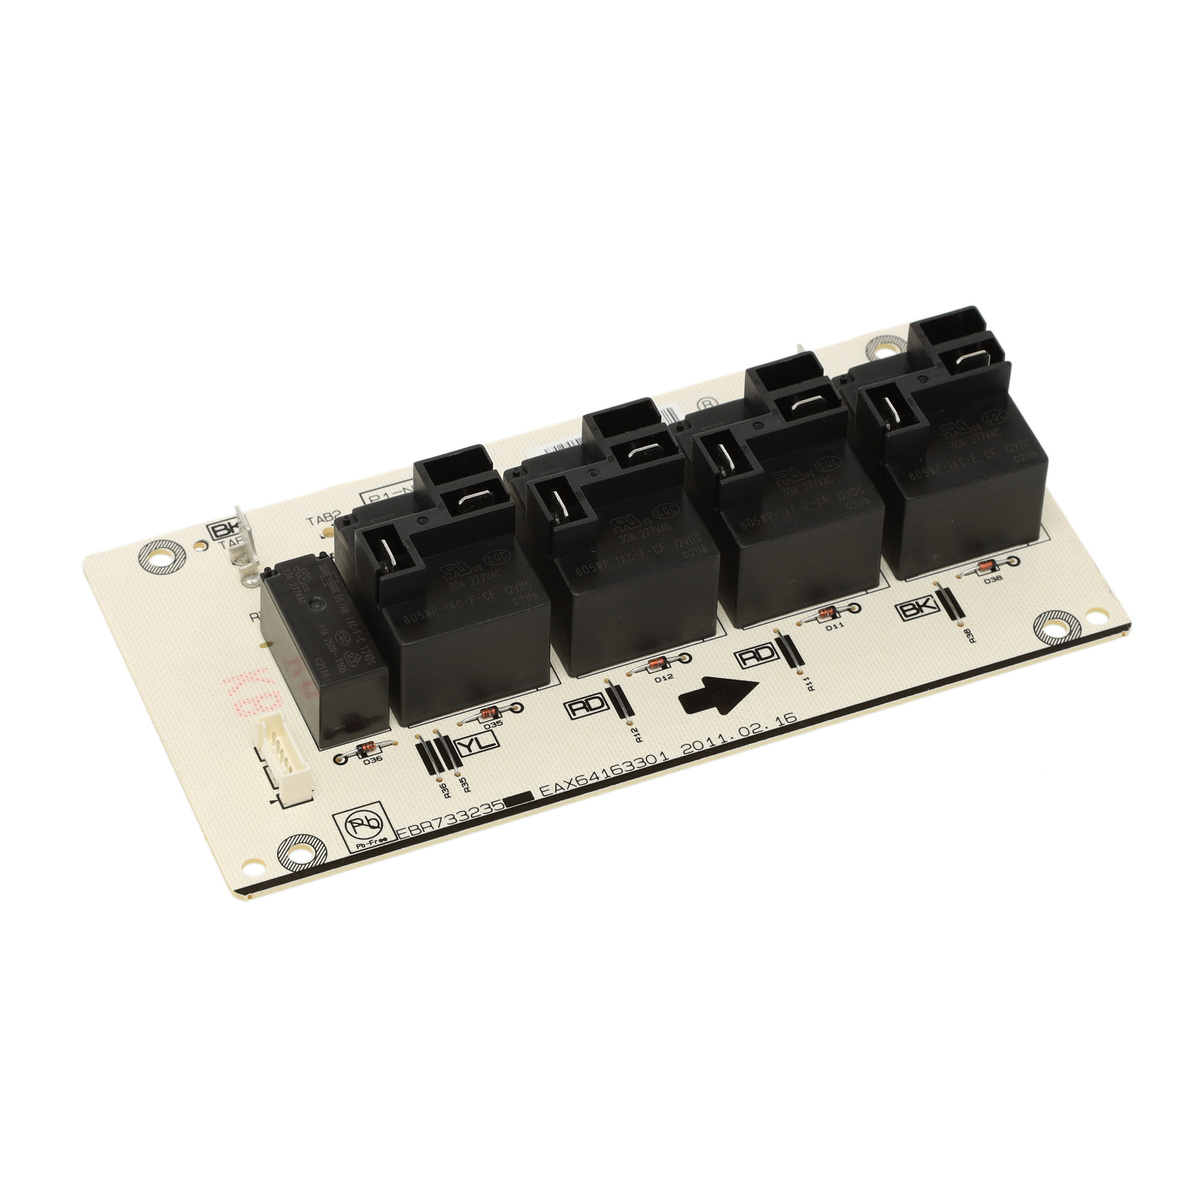 LG Range Oven Main Control Board PCB Assembly. Part #EBR73323501